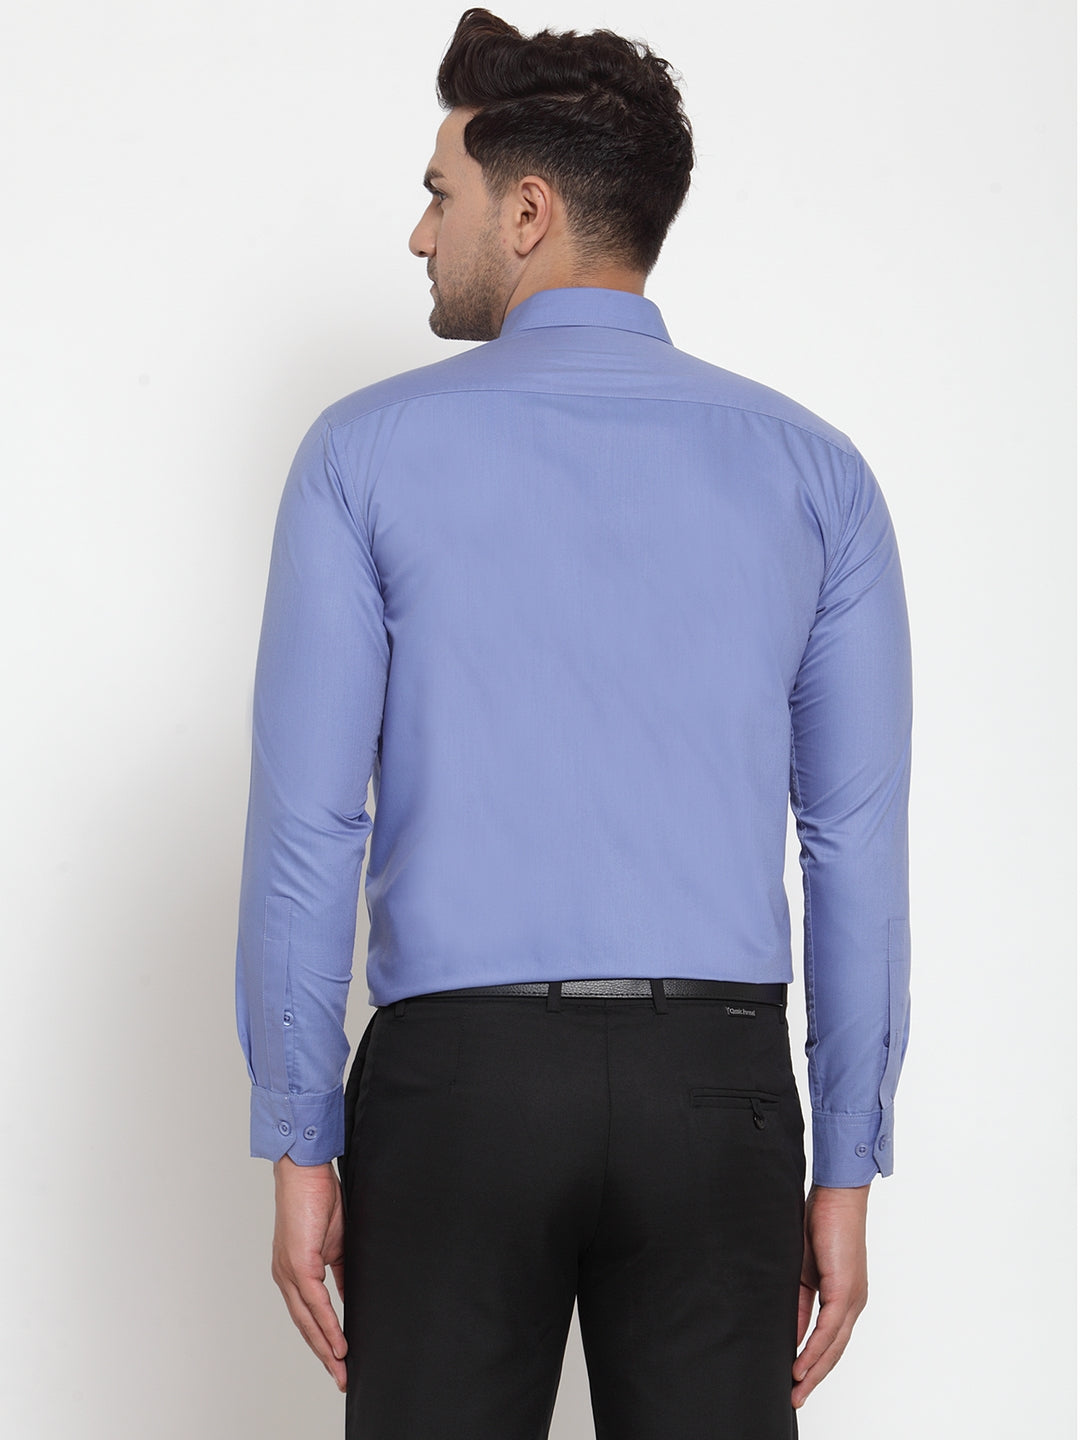 Men's Blue Cotton Solid Button Down Formal Shirts ( SF 713Light-Blue ) - Jainish